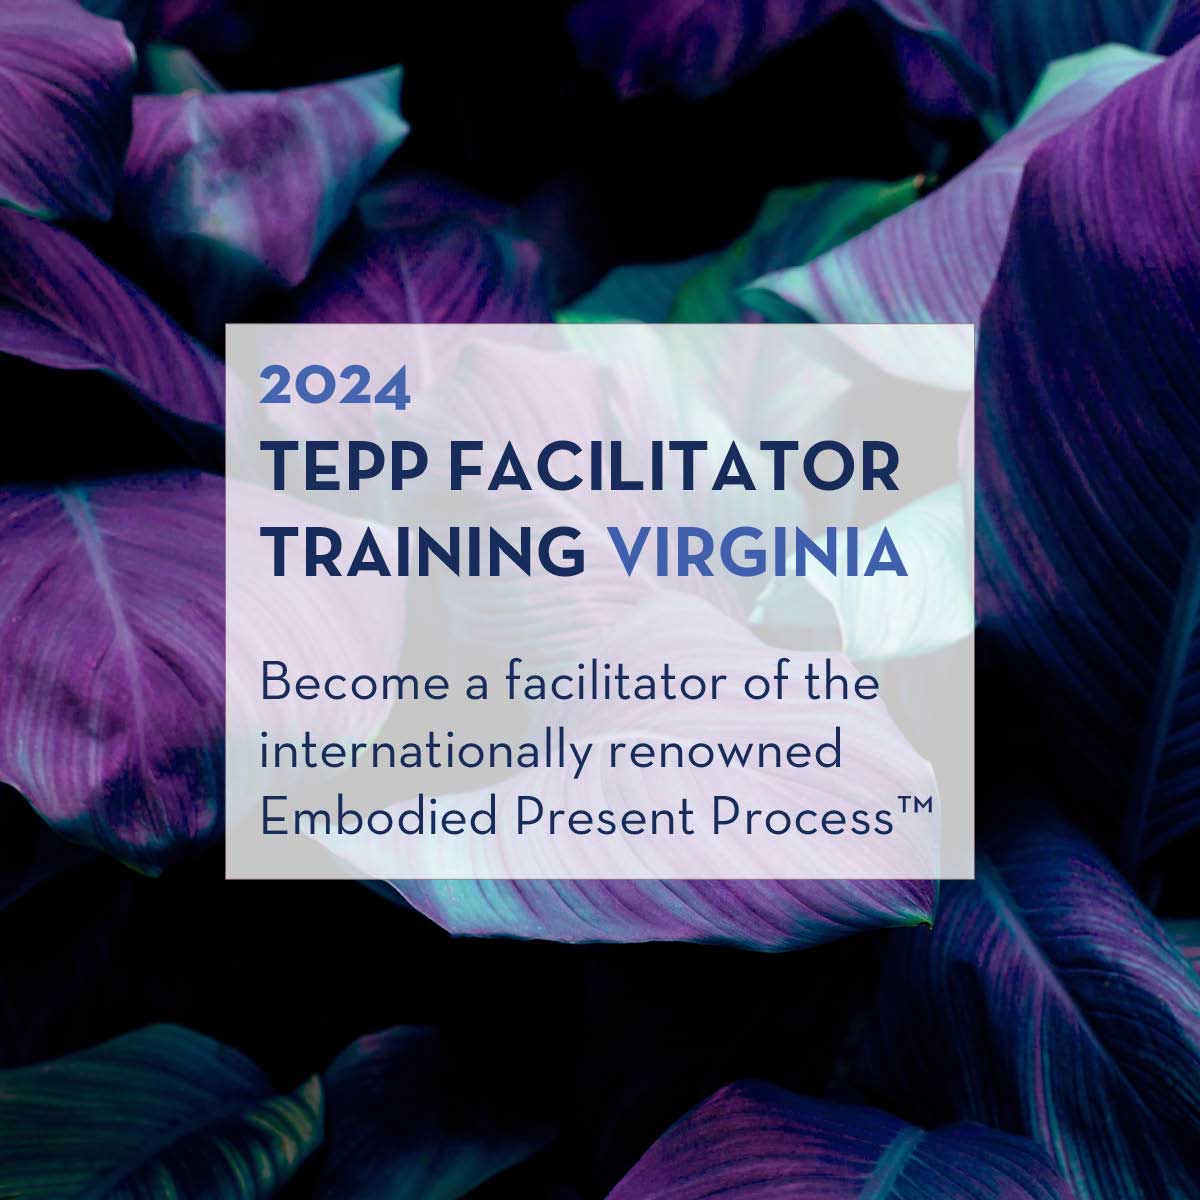 TEPP Facilitator Training (VA) - The Embodied Present Process